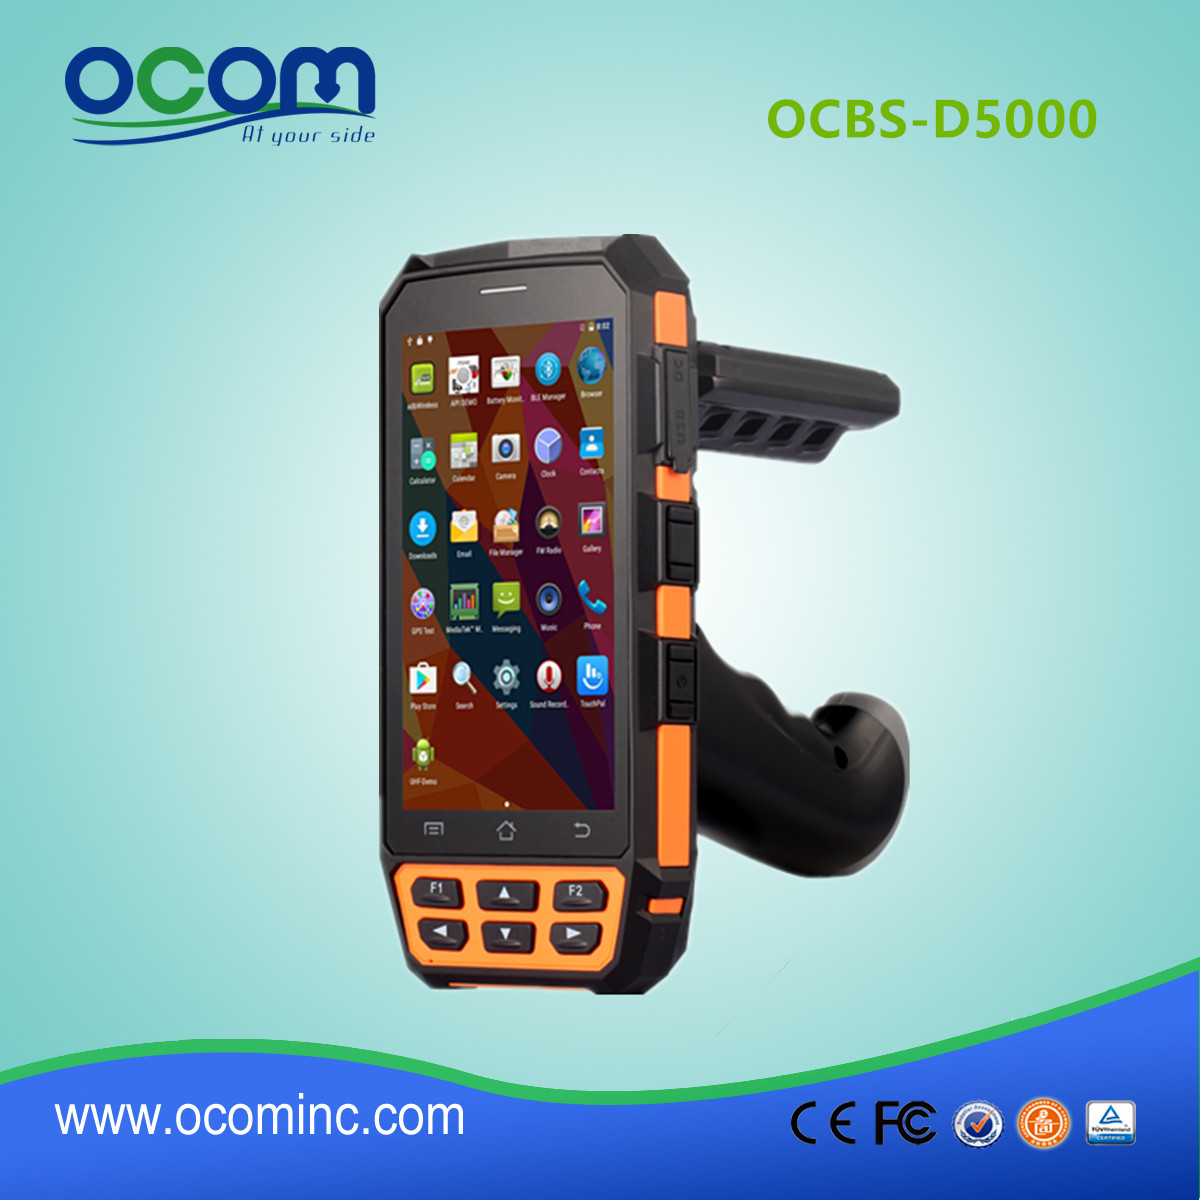 OCBS-D5000 安卓手持便携式掌上电脑数据采集终端数据传输设备